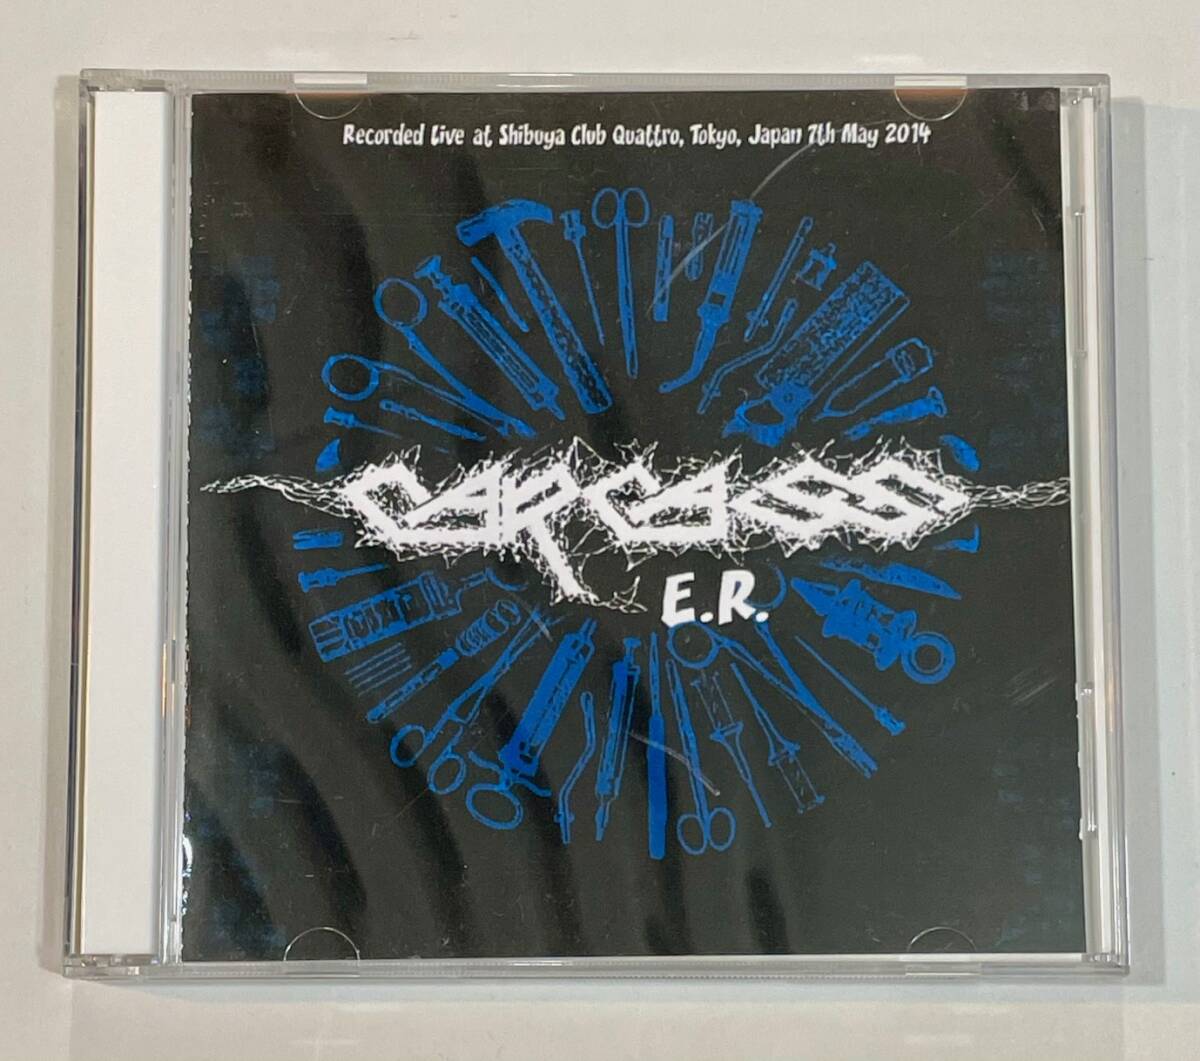 [2CD-R] Carcass E.R. [Live at Shibuya Club Quattro, Tokyo, Japan 7th May 2014] カーカス ビル・スティアー Bill Steerの画像1